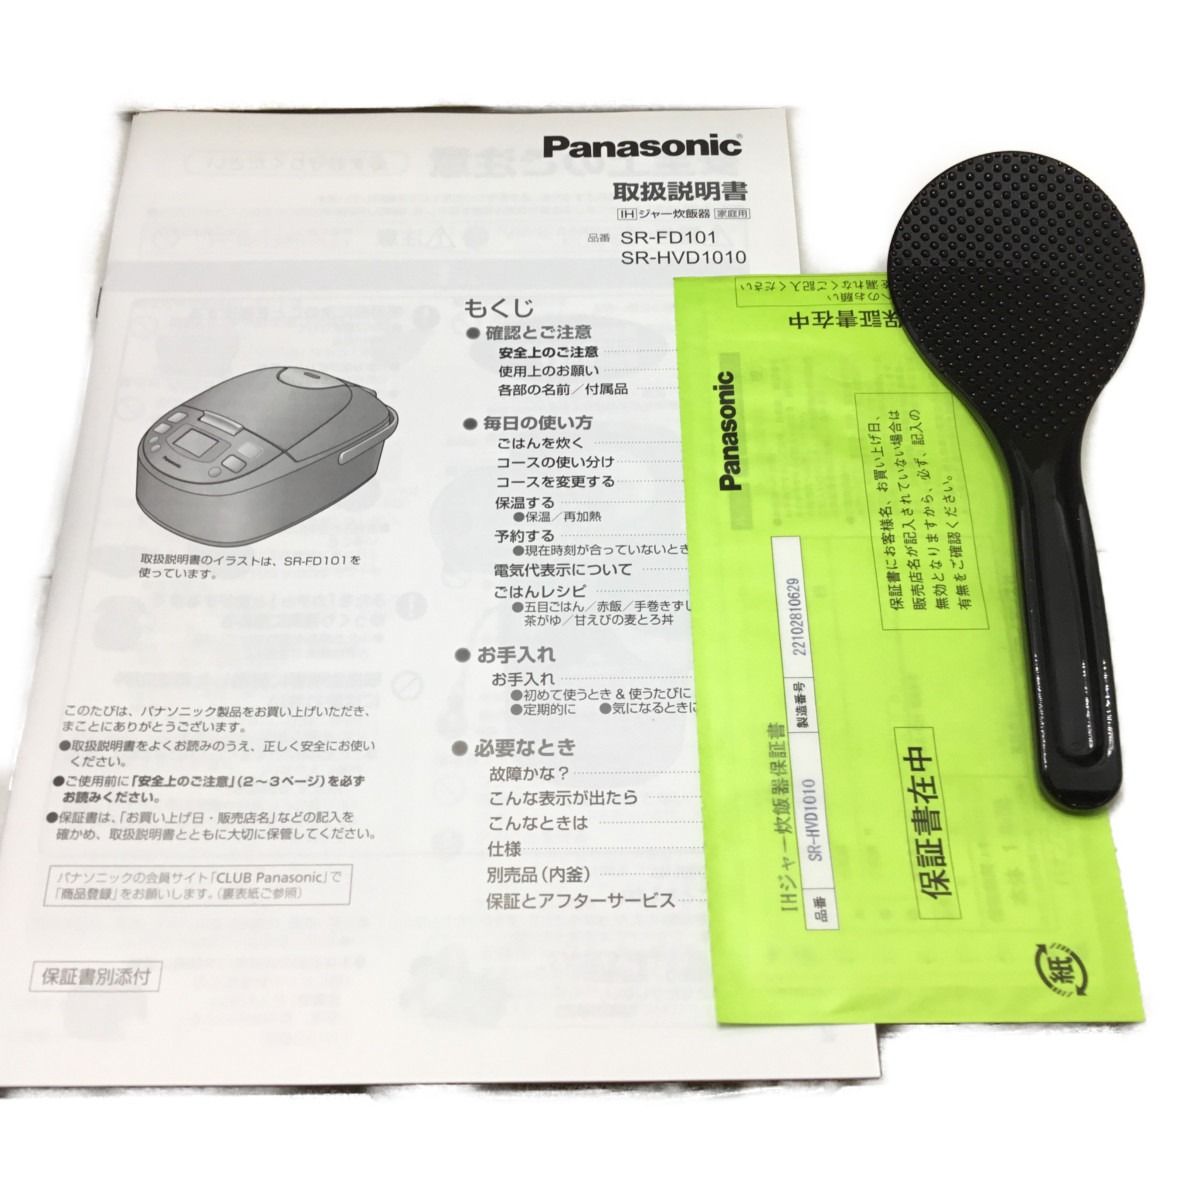 Panasonic ダイヤモンド銅釜 IHジャー炊飯器 SR-HVD1080 - 炊飯器